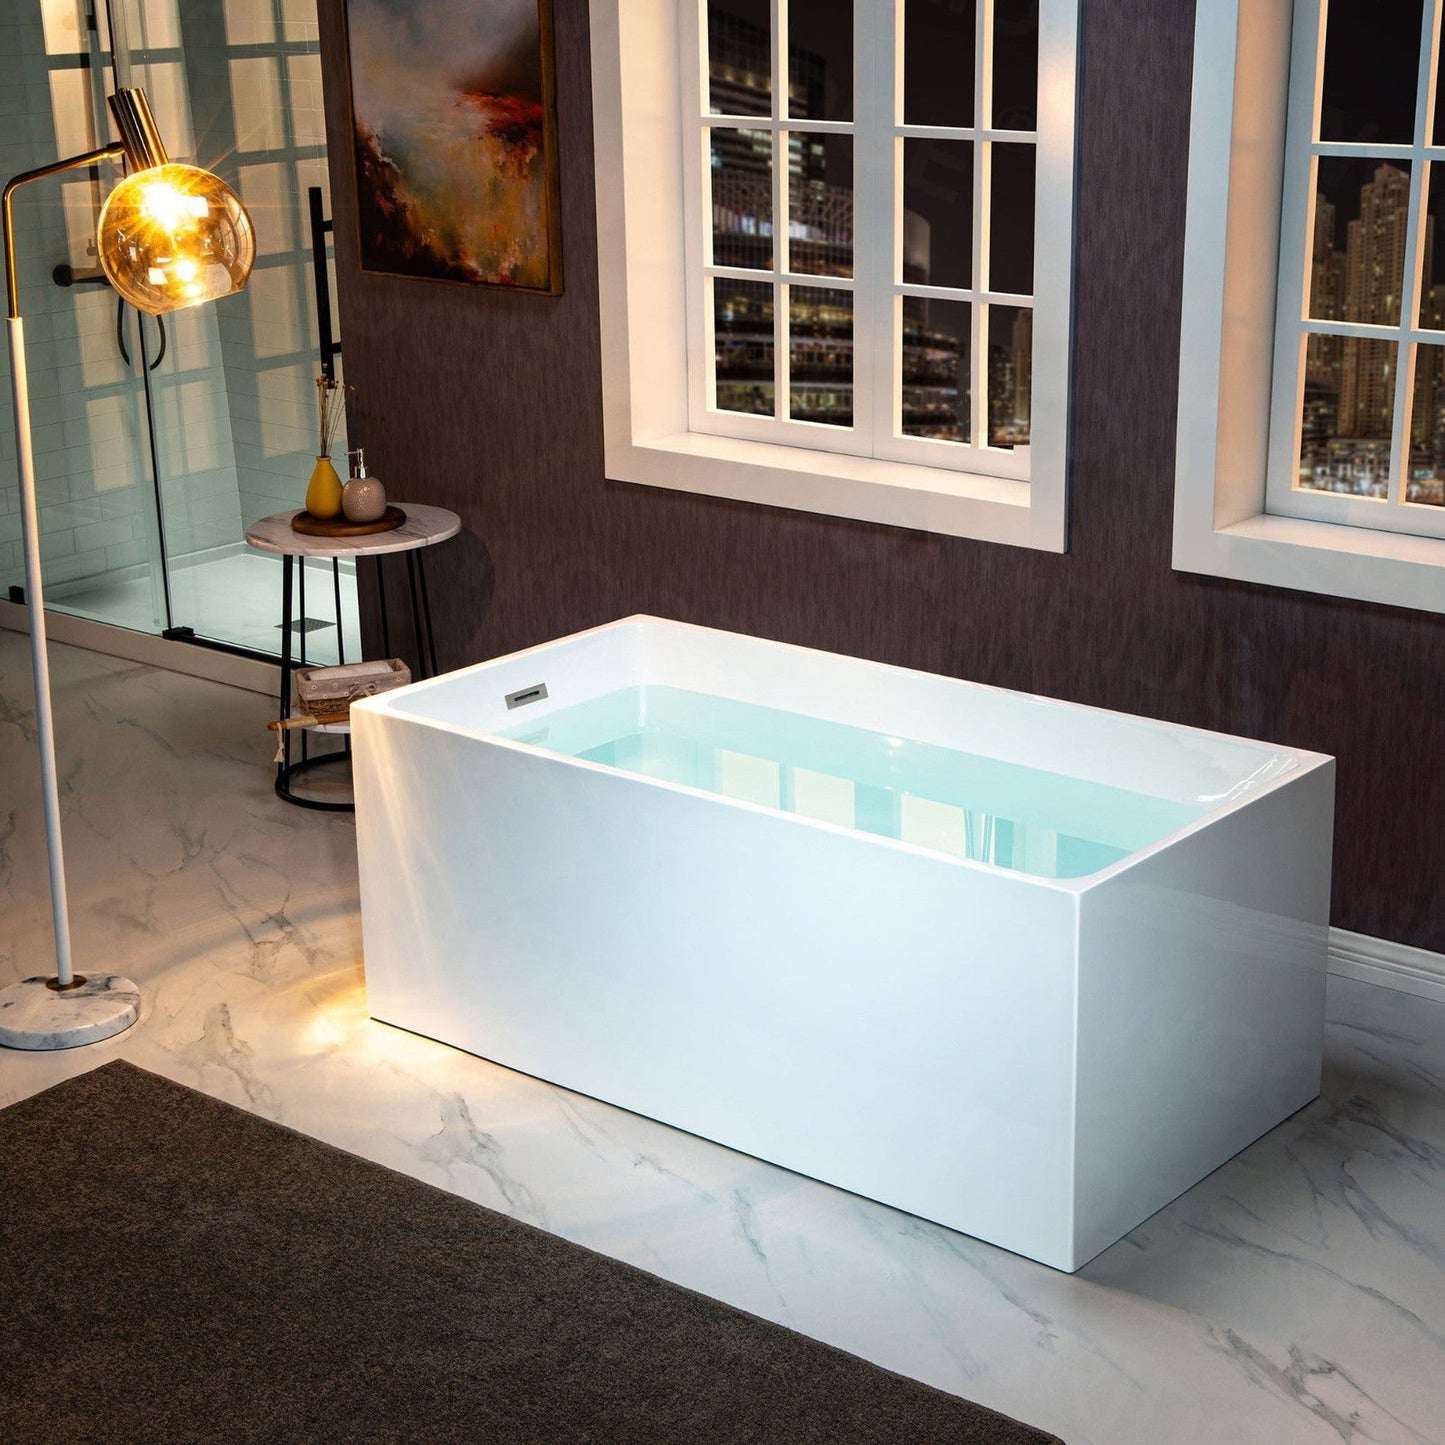 WoodBridge B-0085 59" White Acrylic Freestanding Soaking Bathtub With Chrome Drain, Overflow, F0071CHVT Tub Filler and Caddy Tray